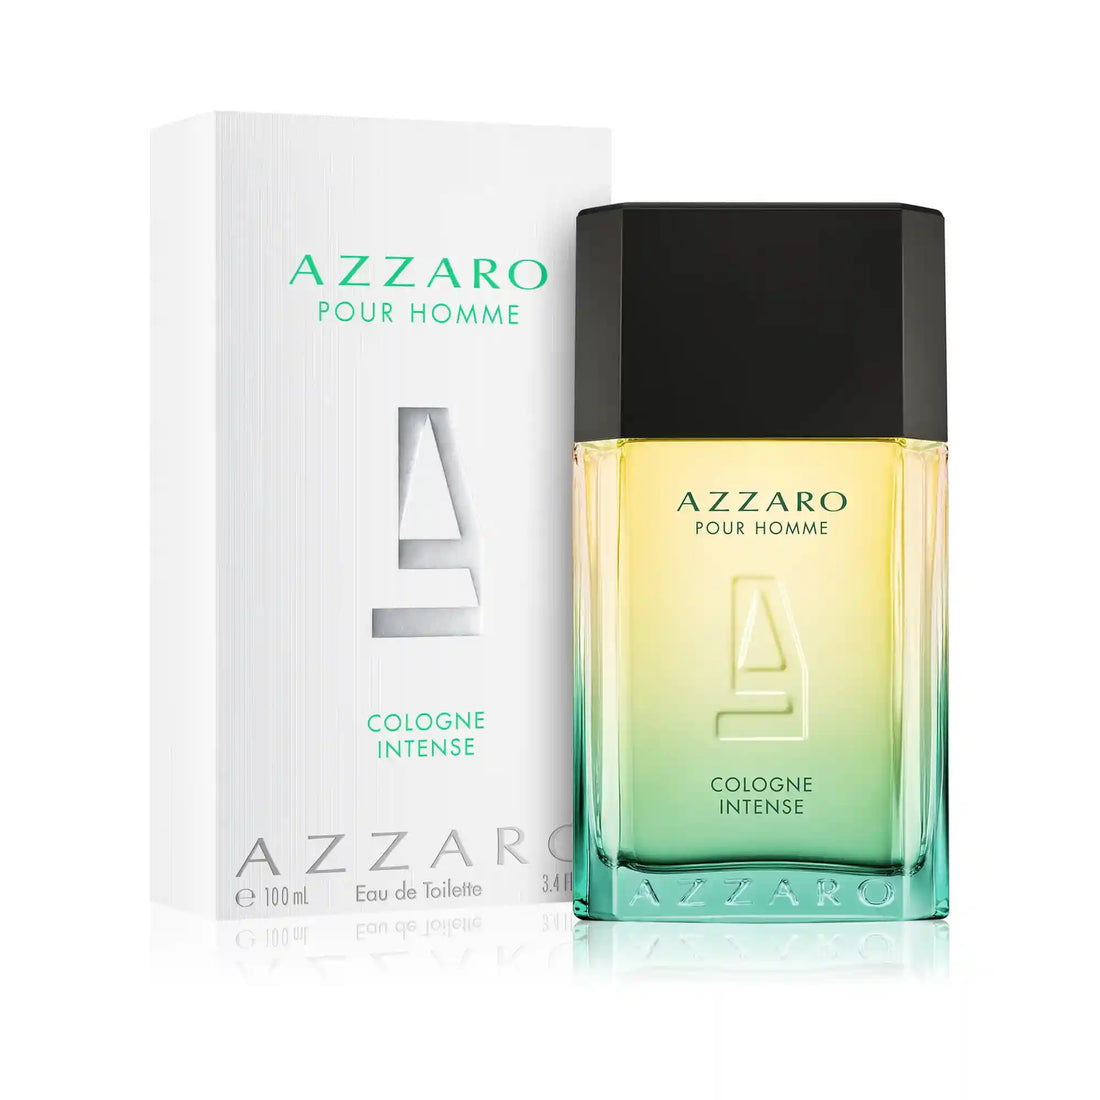 Azzaro Pour Homme Cologne Intense Eau de Toilette Spray 100ml with Packaging